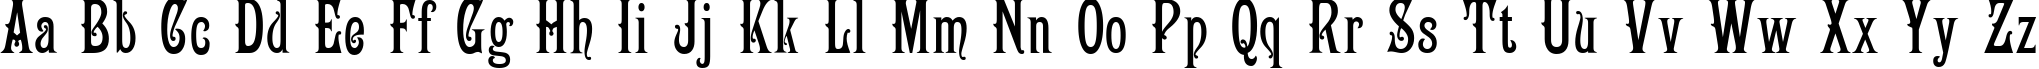 Пример написания английского алфавита шрифтом Campanile